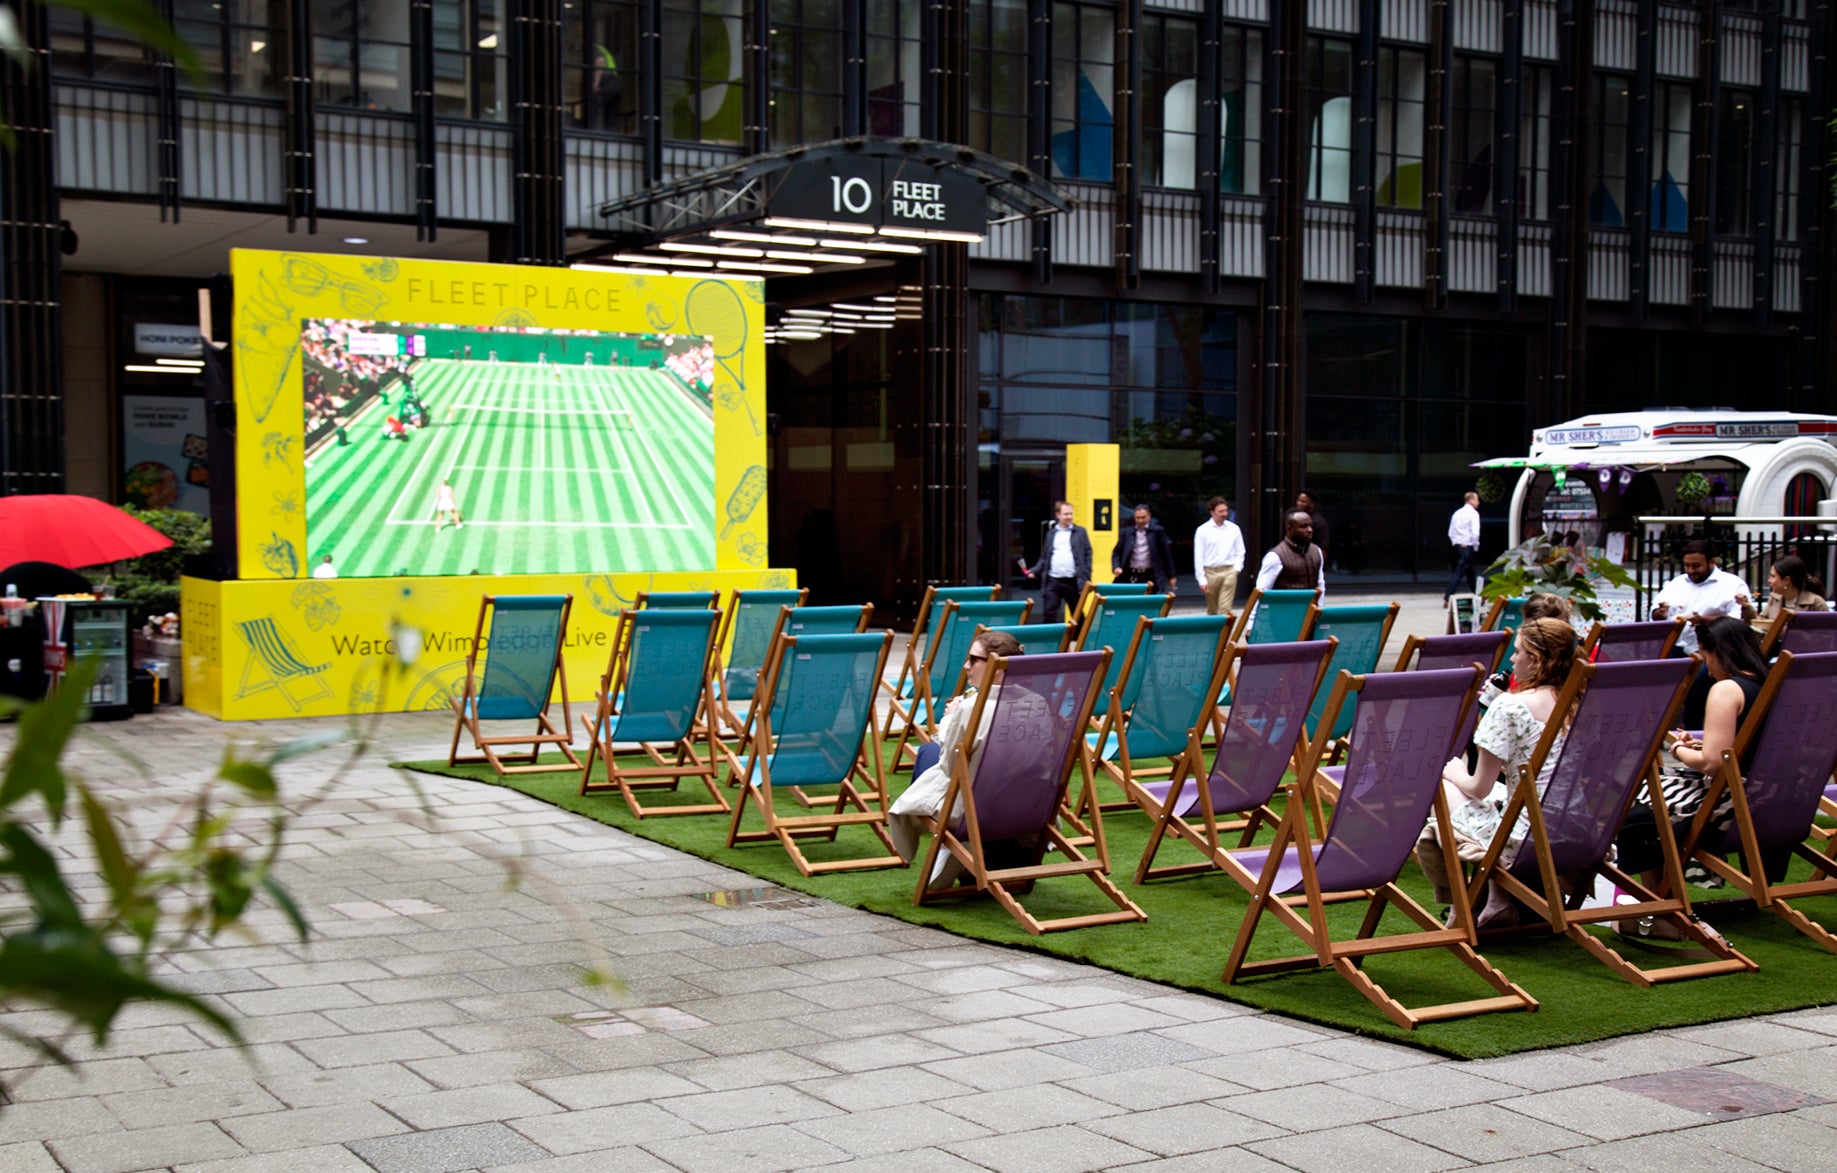 The Fleet Street Quarter is serving up tennis al fresco